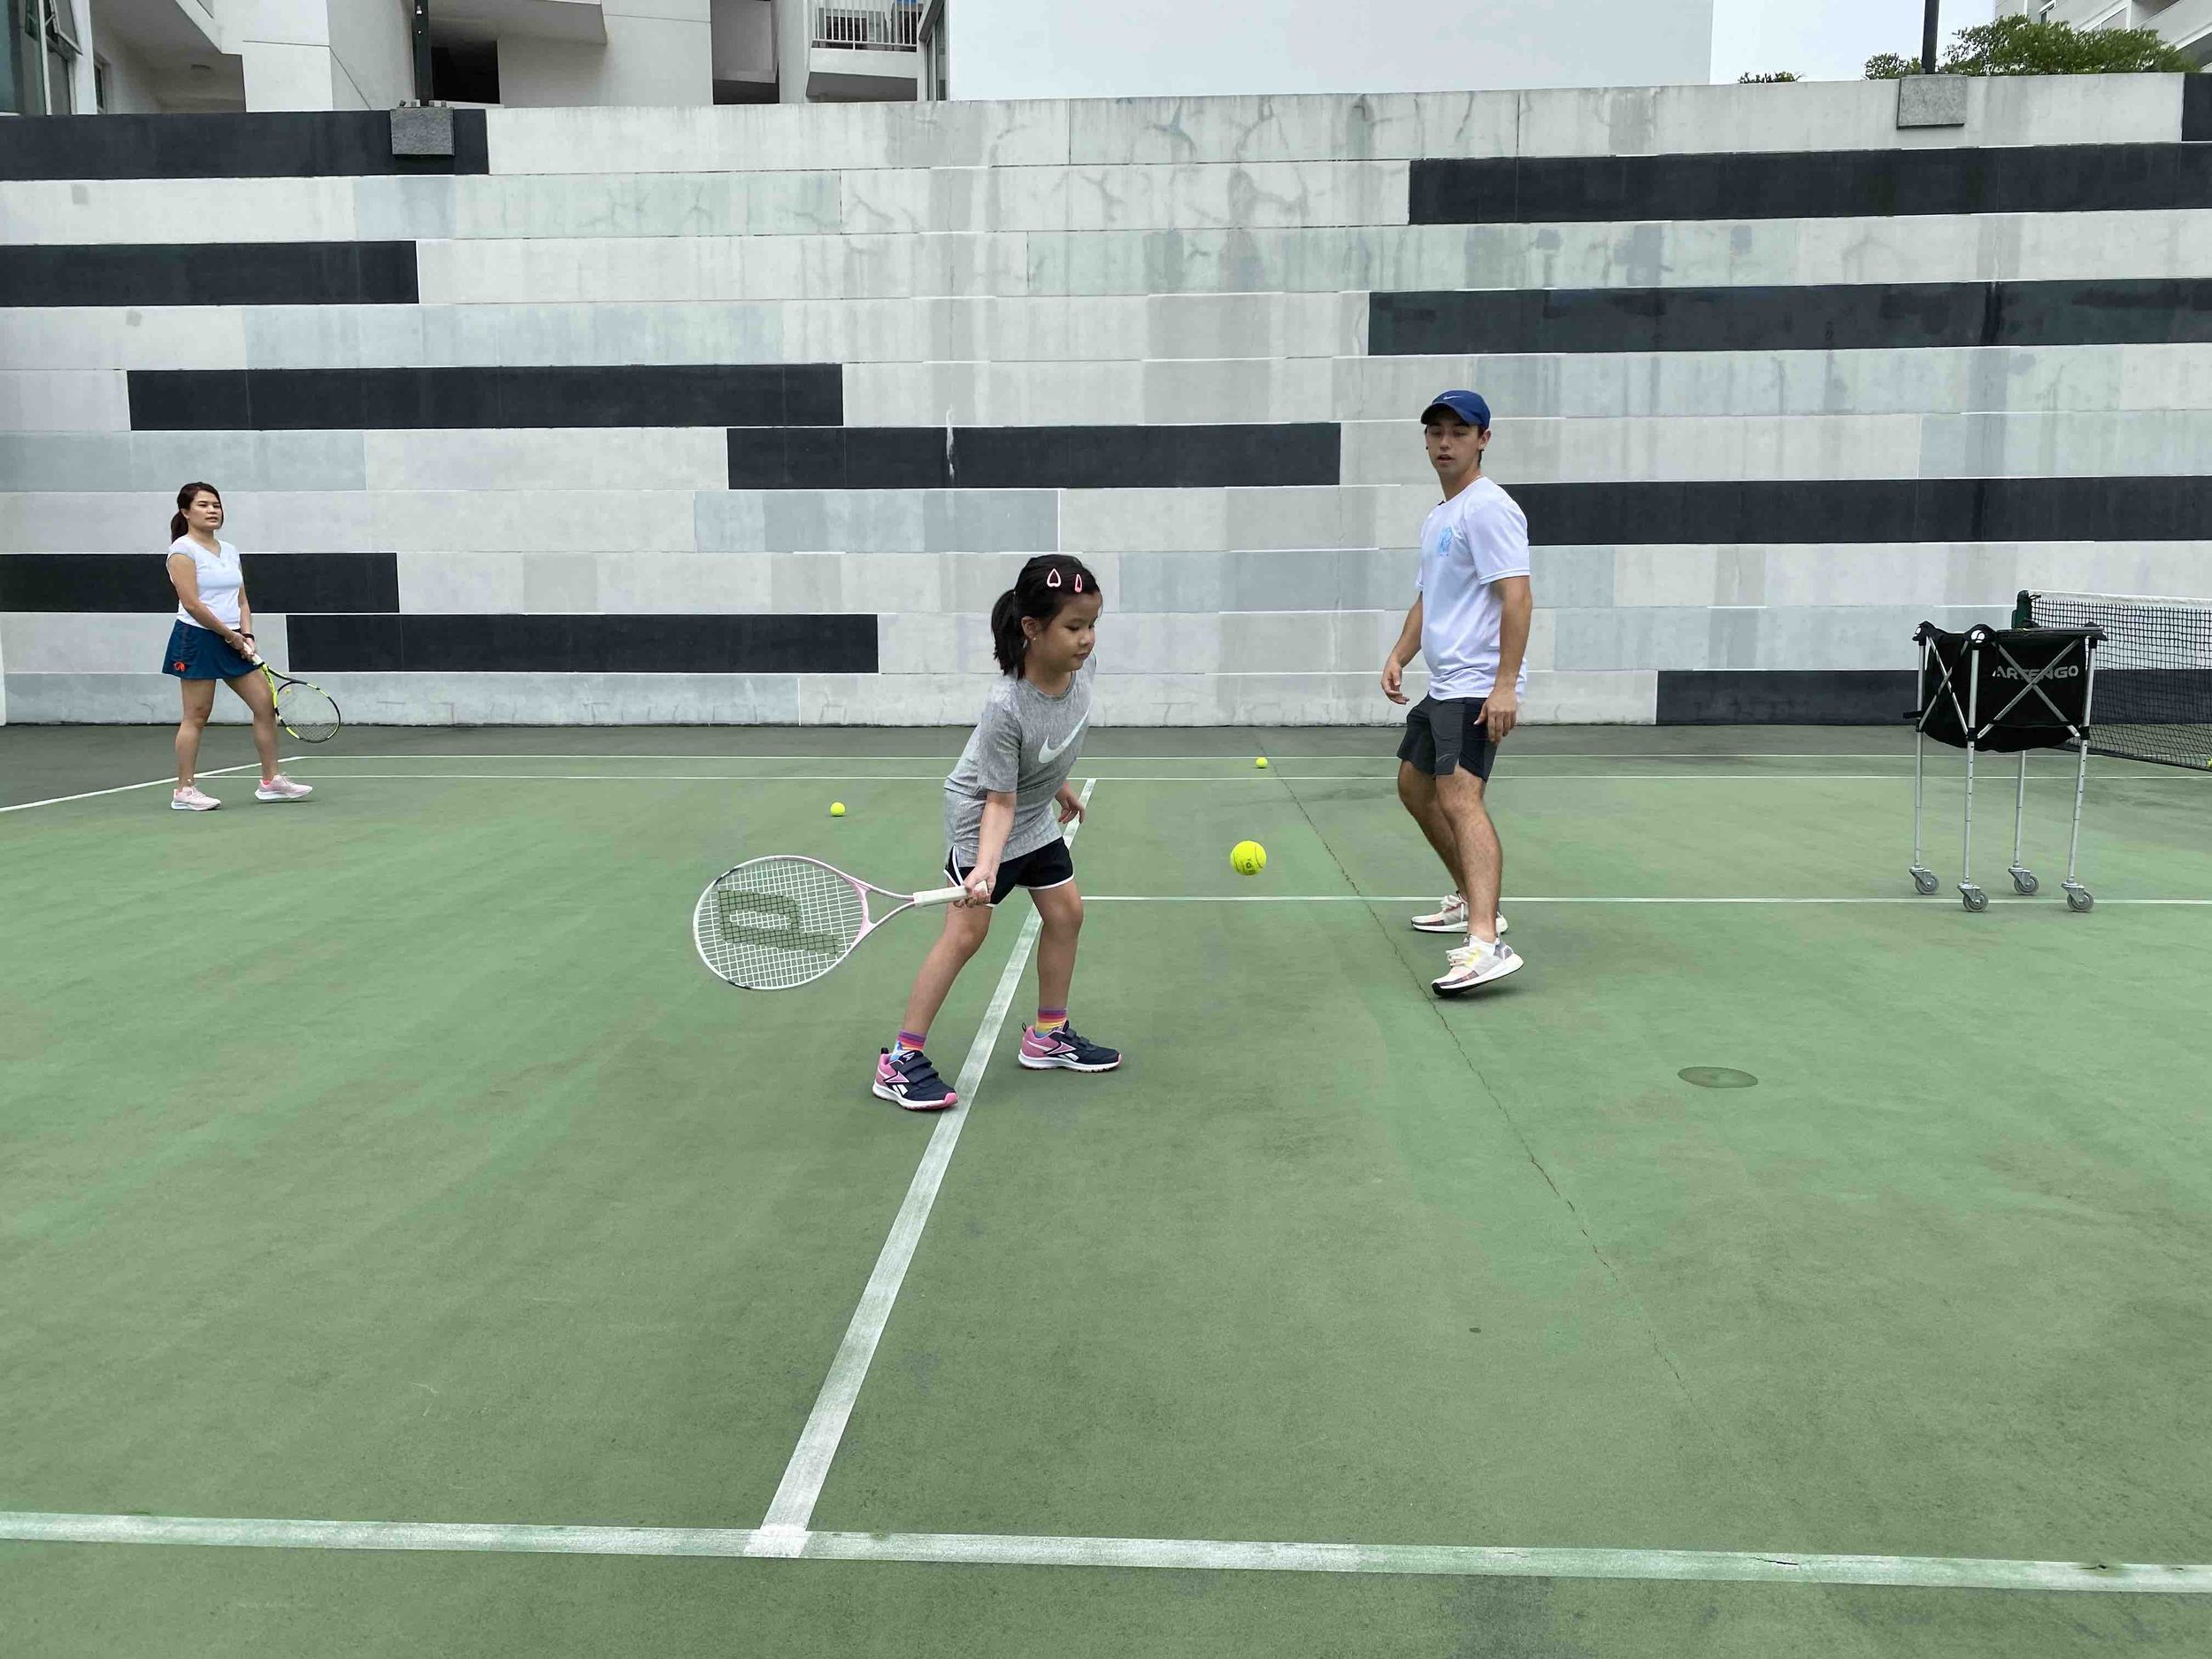 Tennis-Lessons-Singapore-Family.jpg